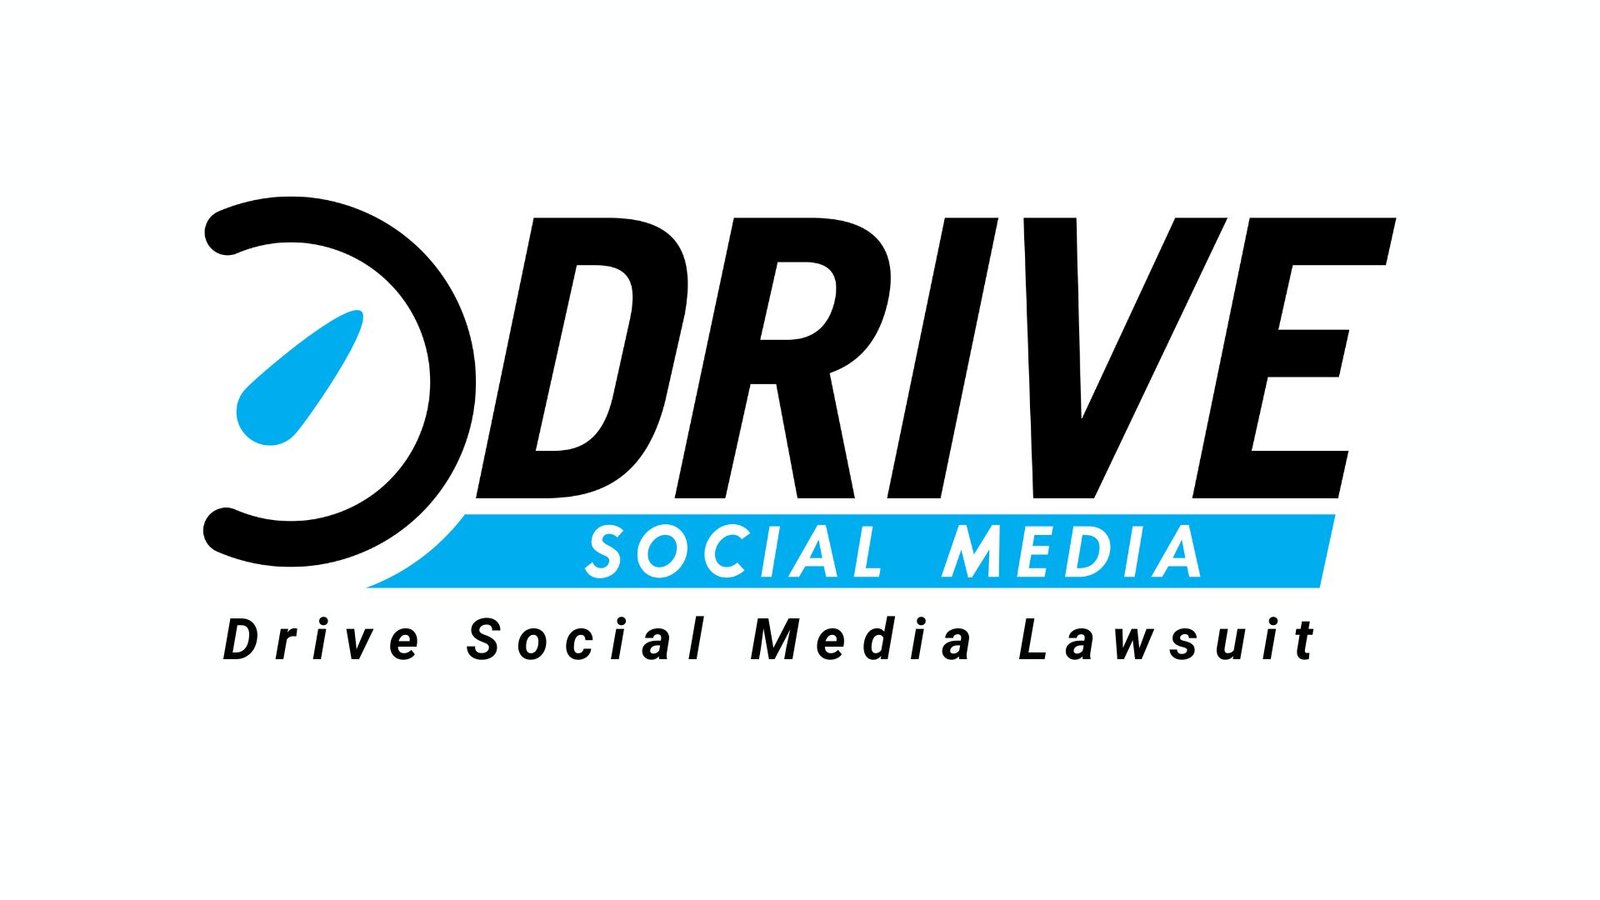 Drive Social Media Lawsuit